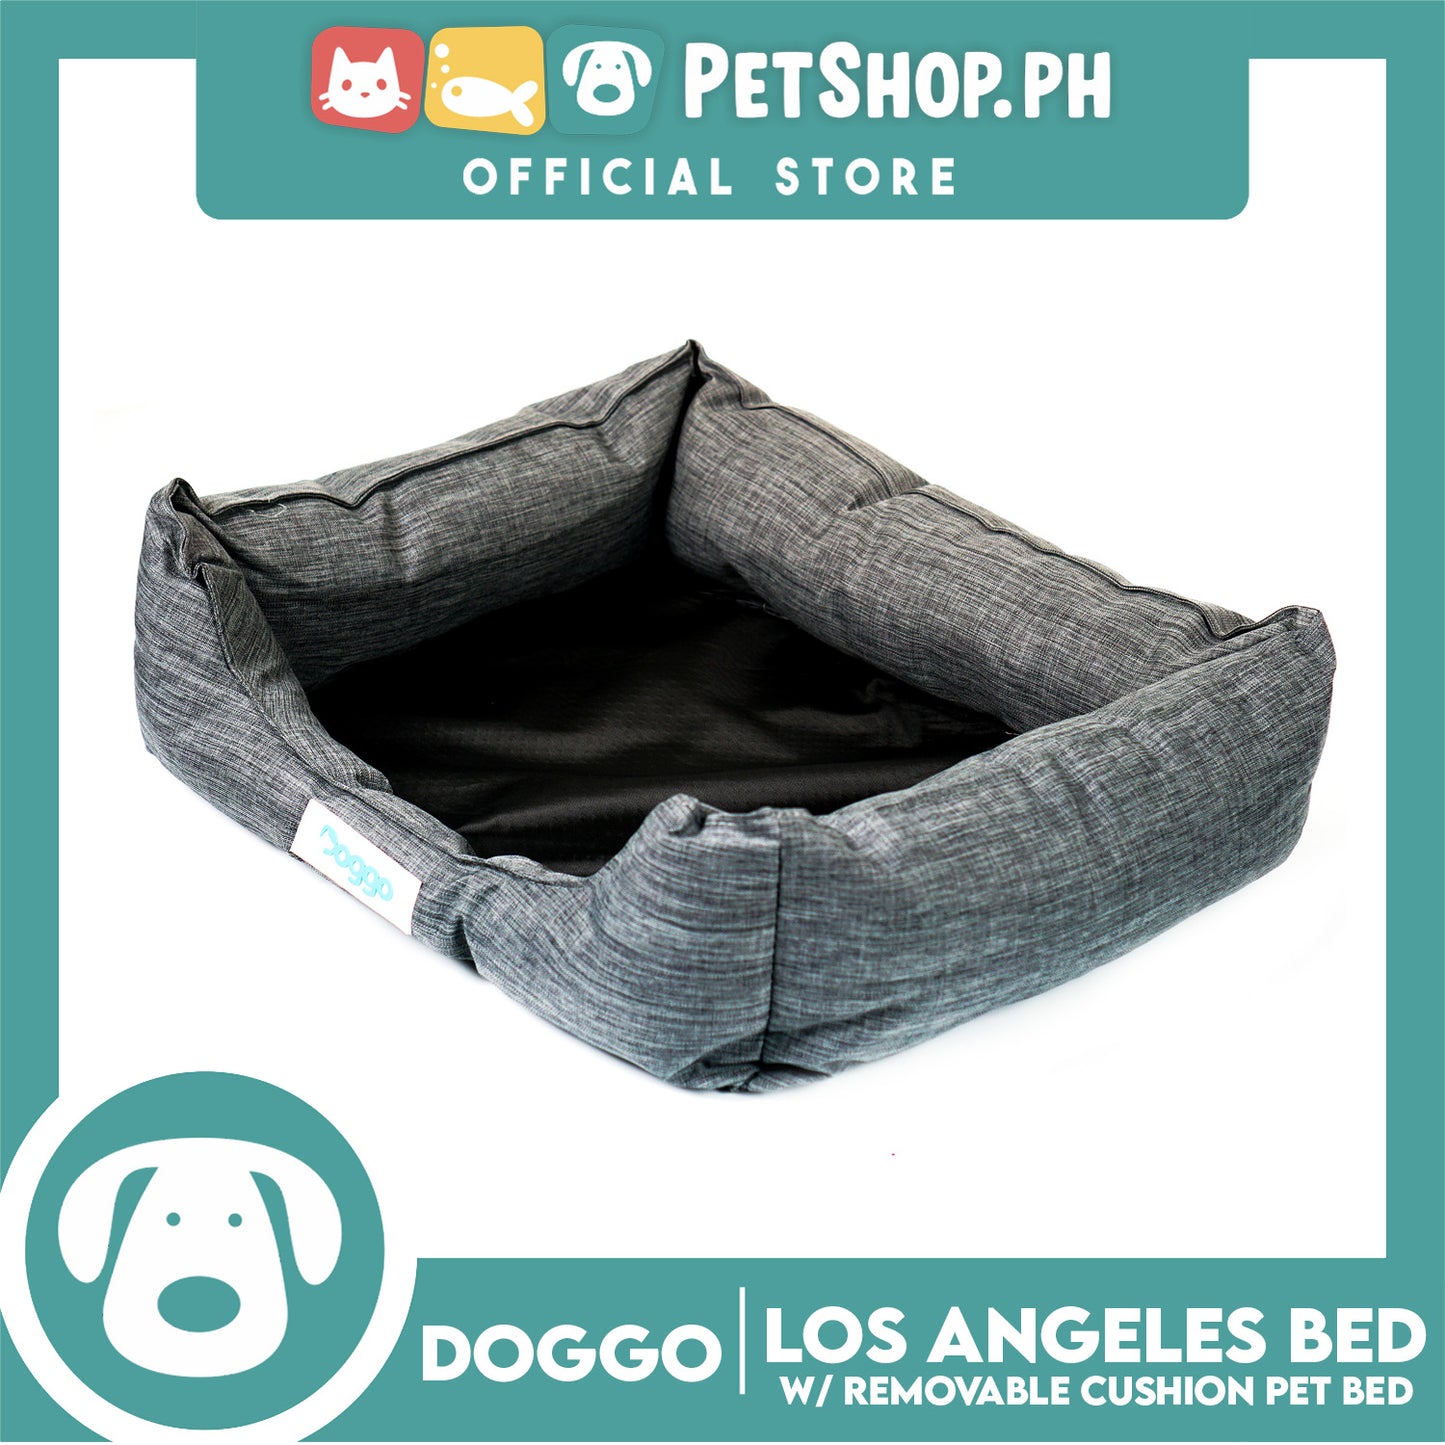 Doggo Los Angeles Bed (XXL) Comfortable Pet Bed